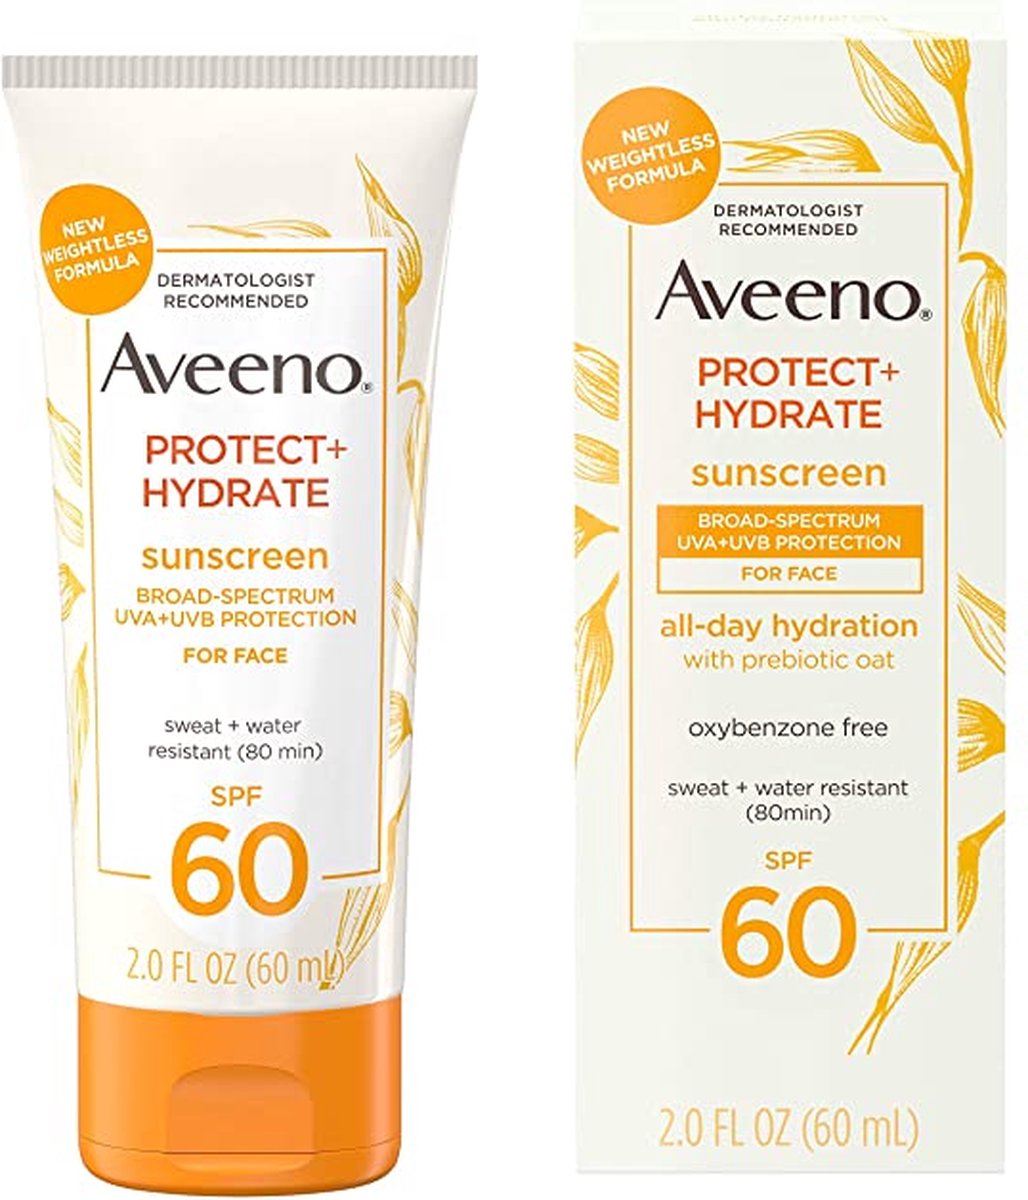 Aveeno Protect + Hydrate Sunscreen met SPF 60